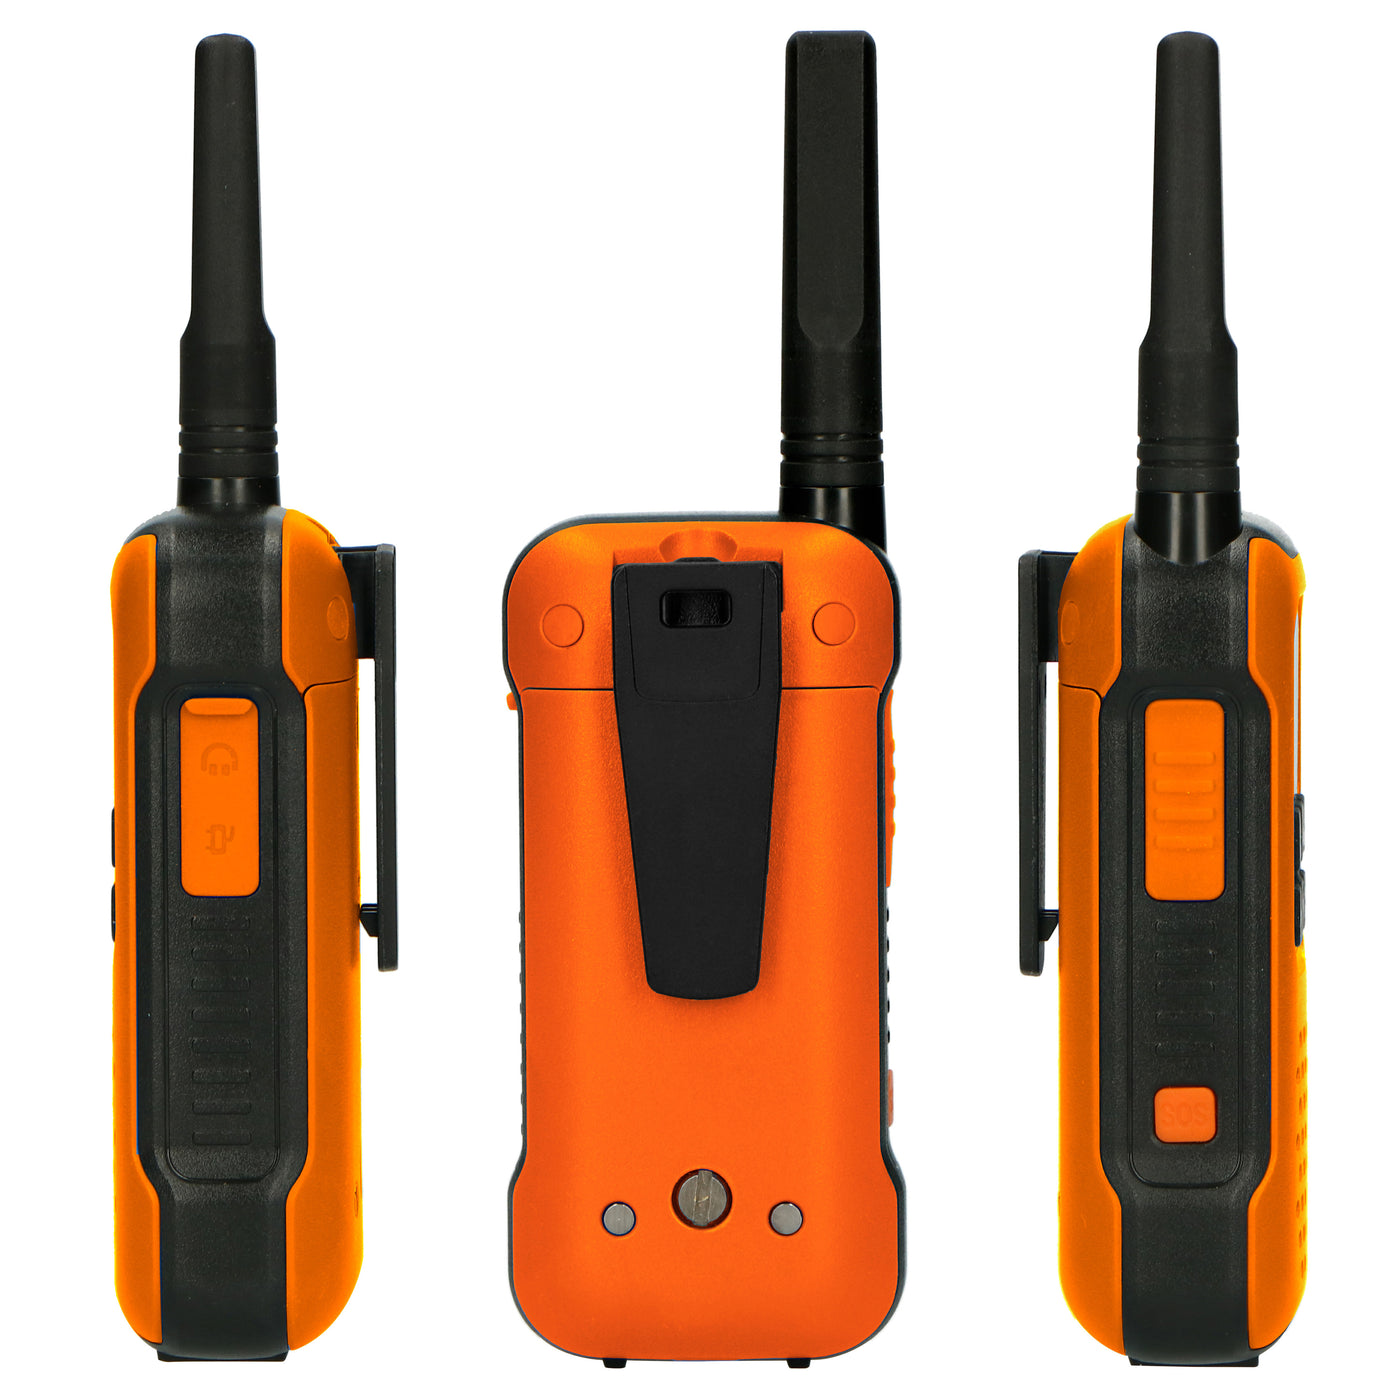 Alecto FR300OE - Ruggedized Two-Way radio, range up to 10 kilometers, orange/black